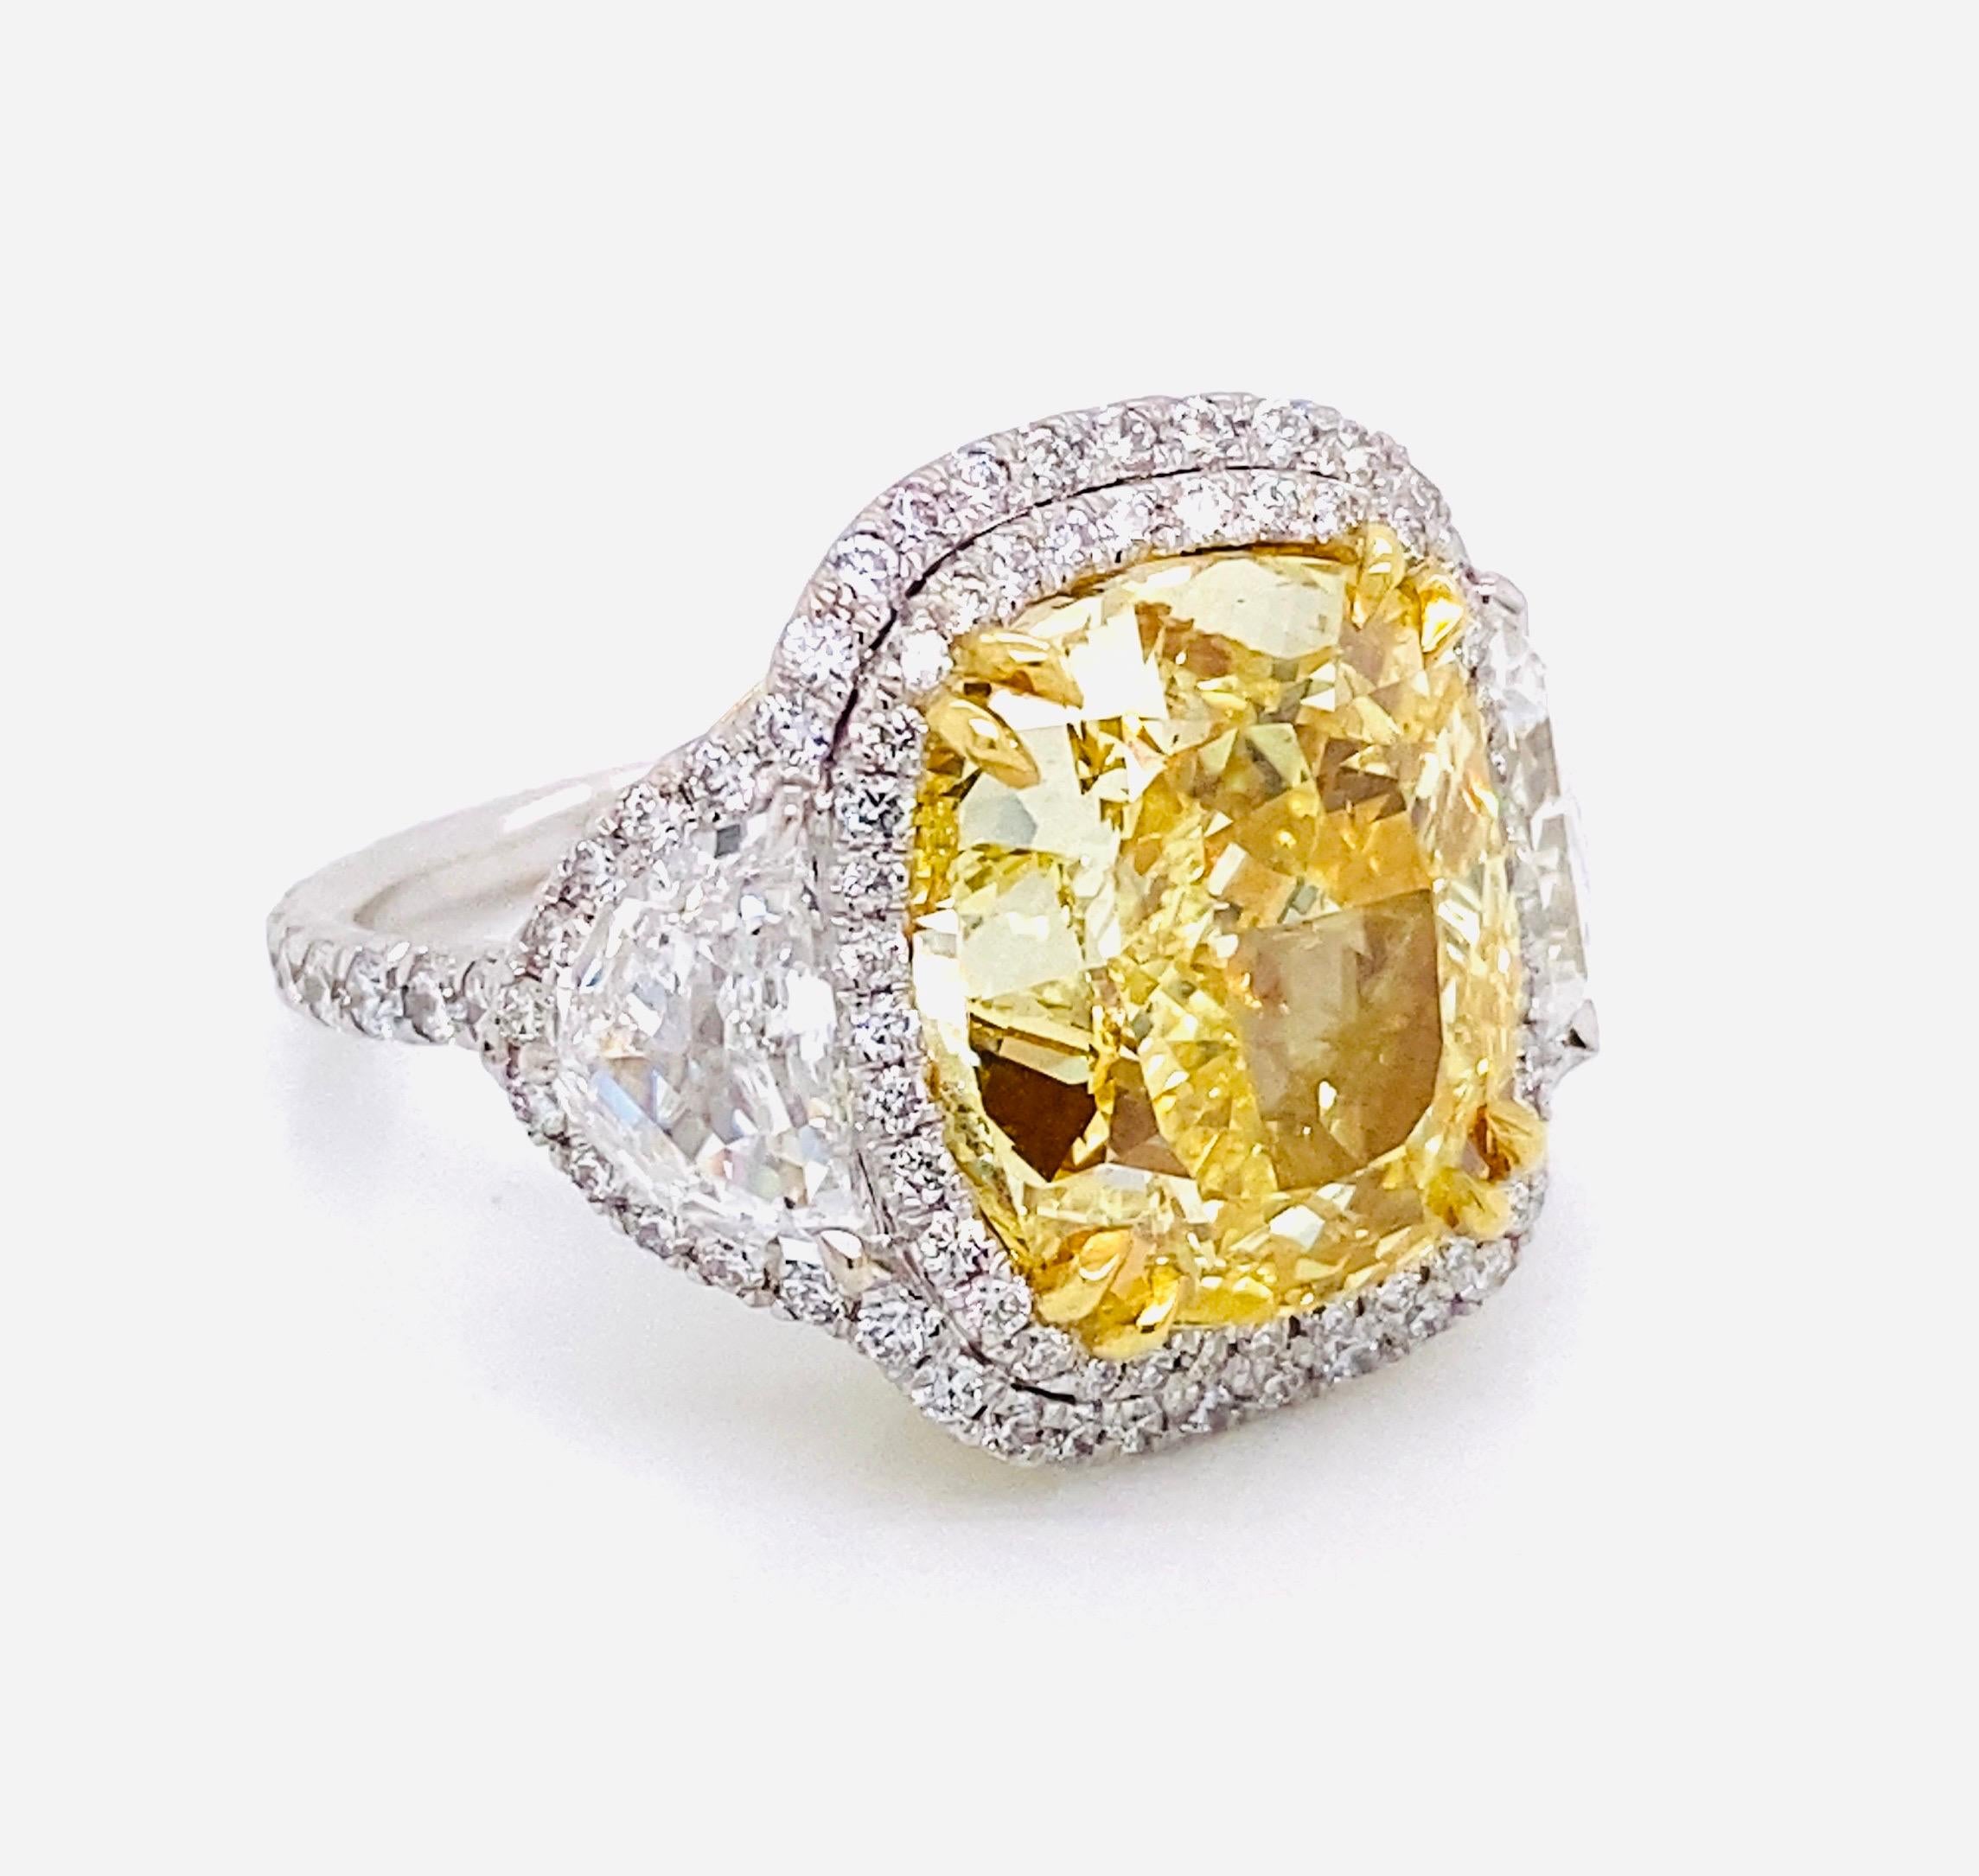 Cushion Cut Emilio Jewelry GIA Certified 12.67 Carat Fancy Intense Yellow Diamond Ring For Sale